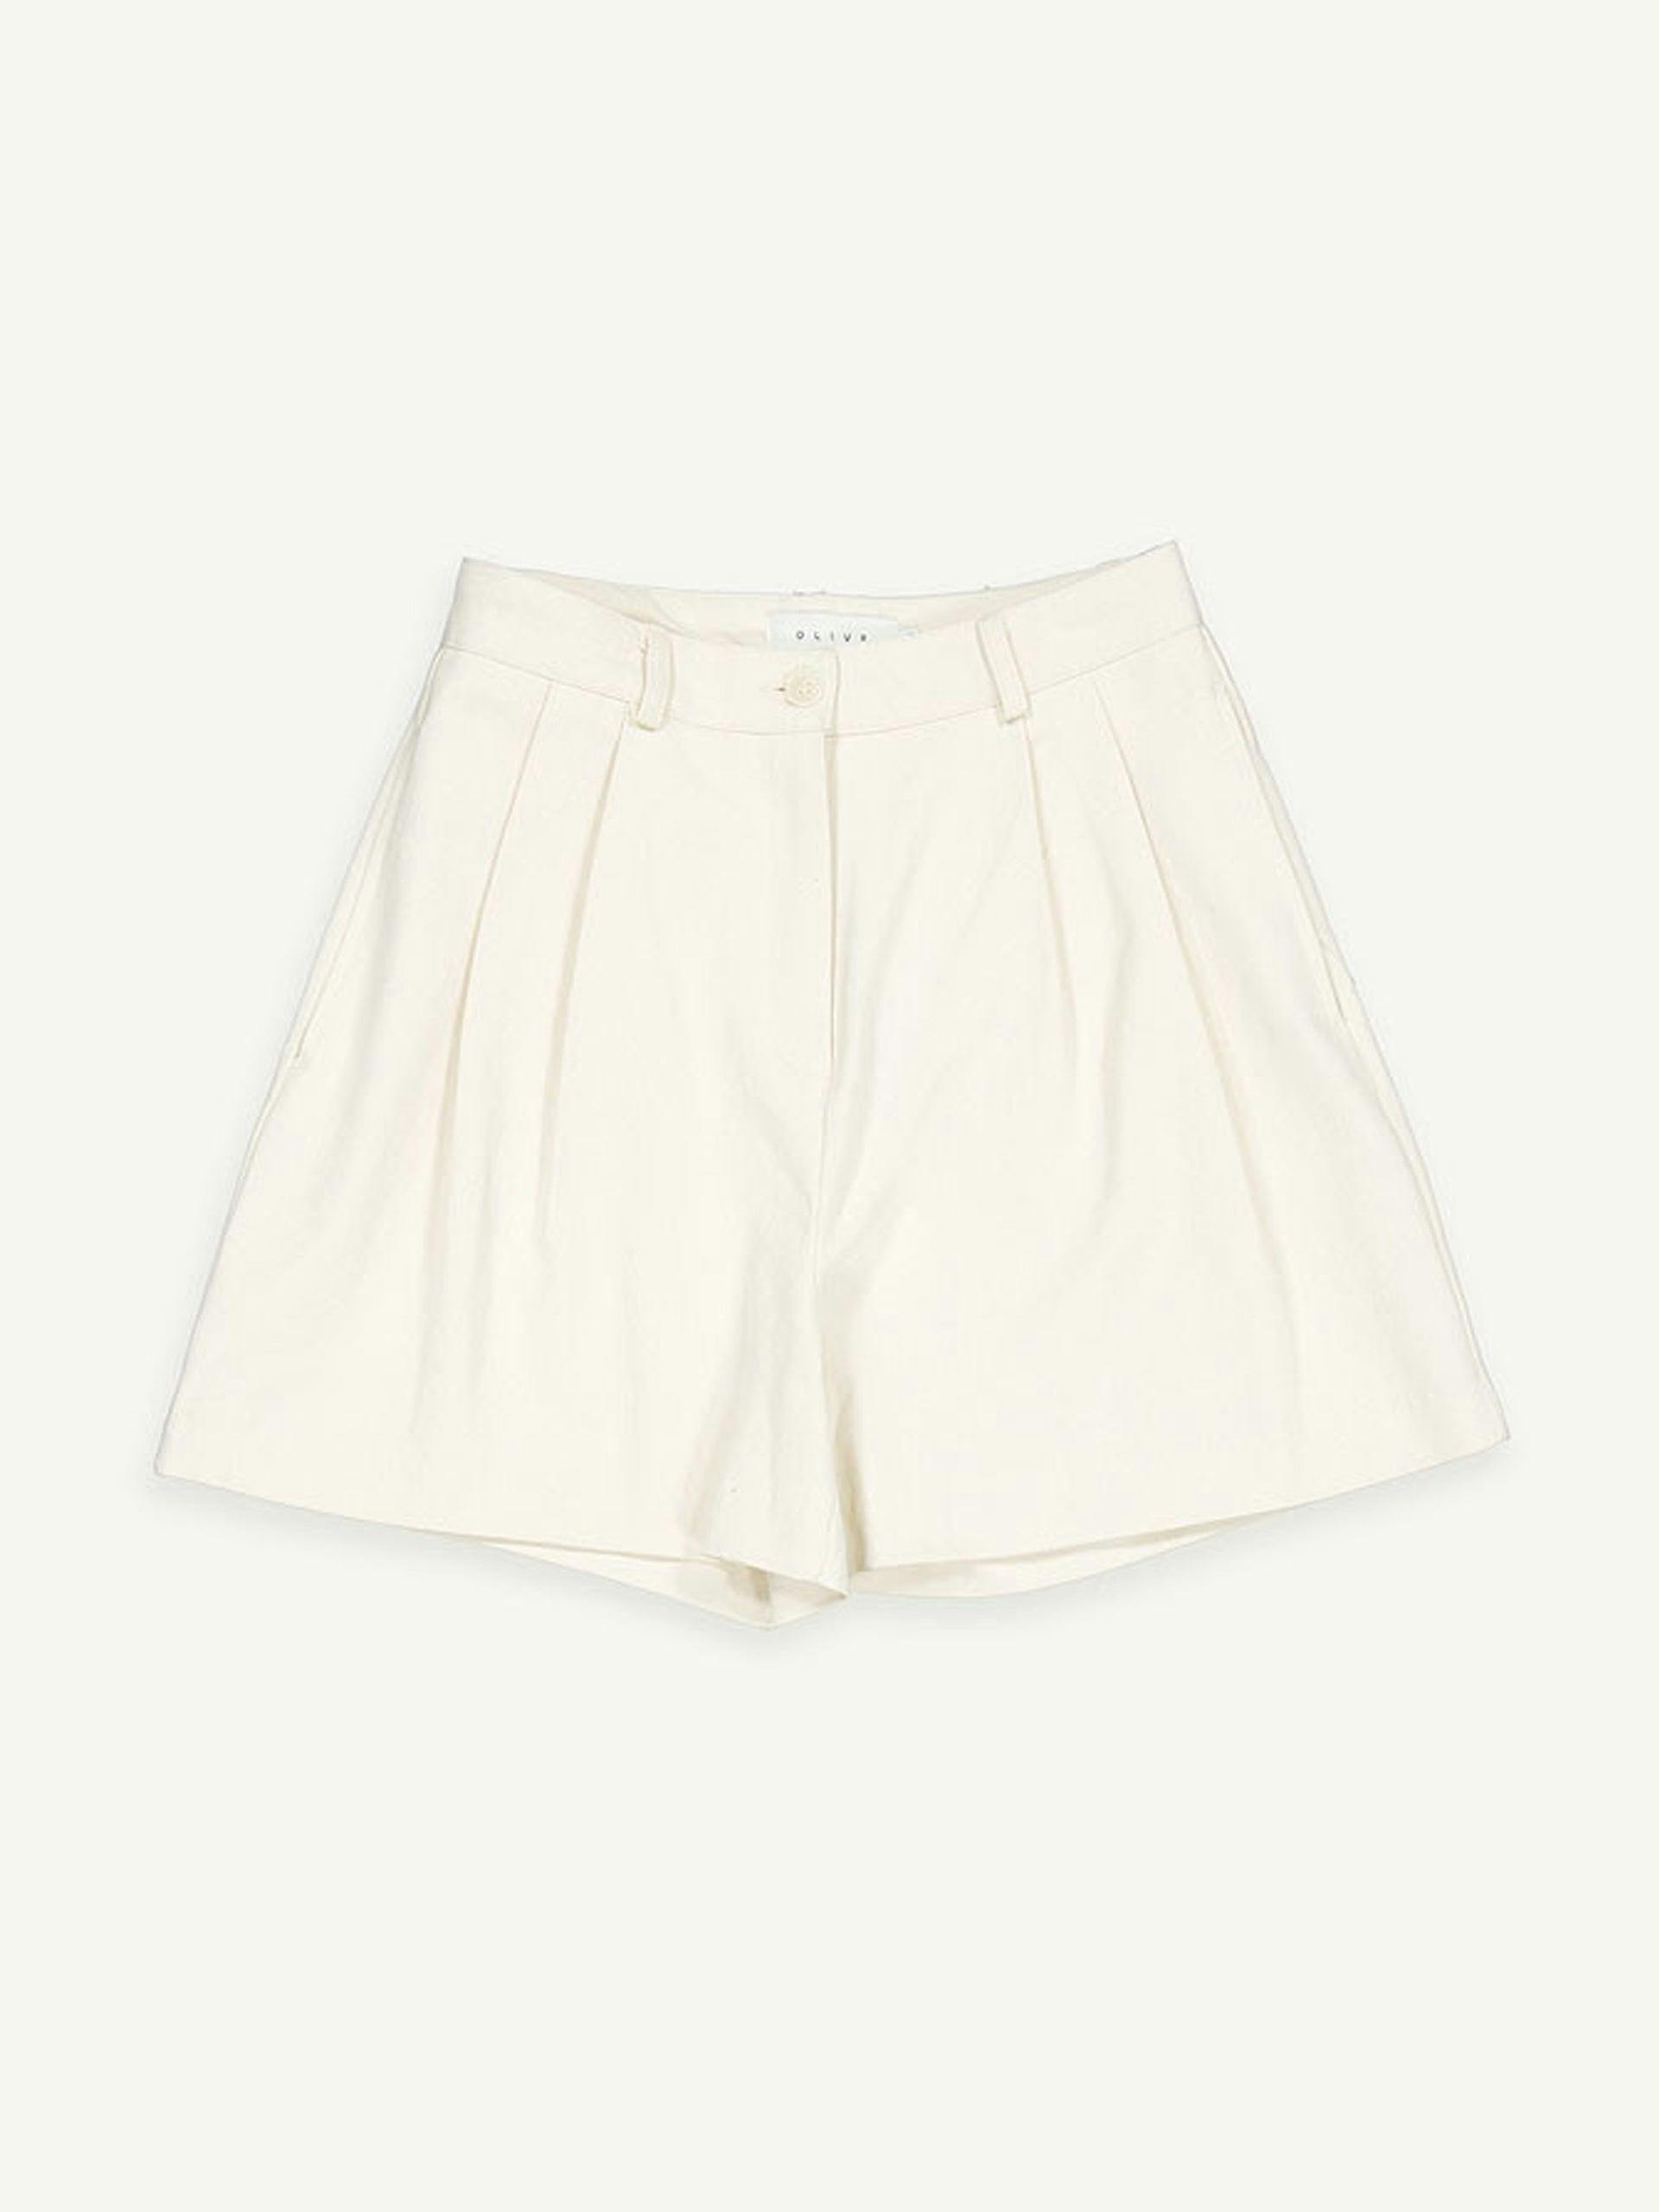 Cream cotton shorts